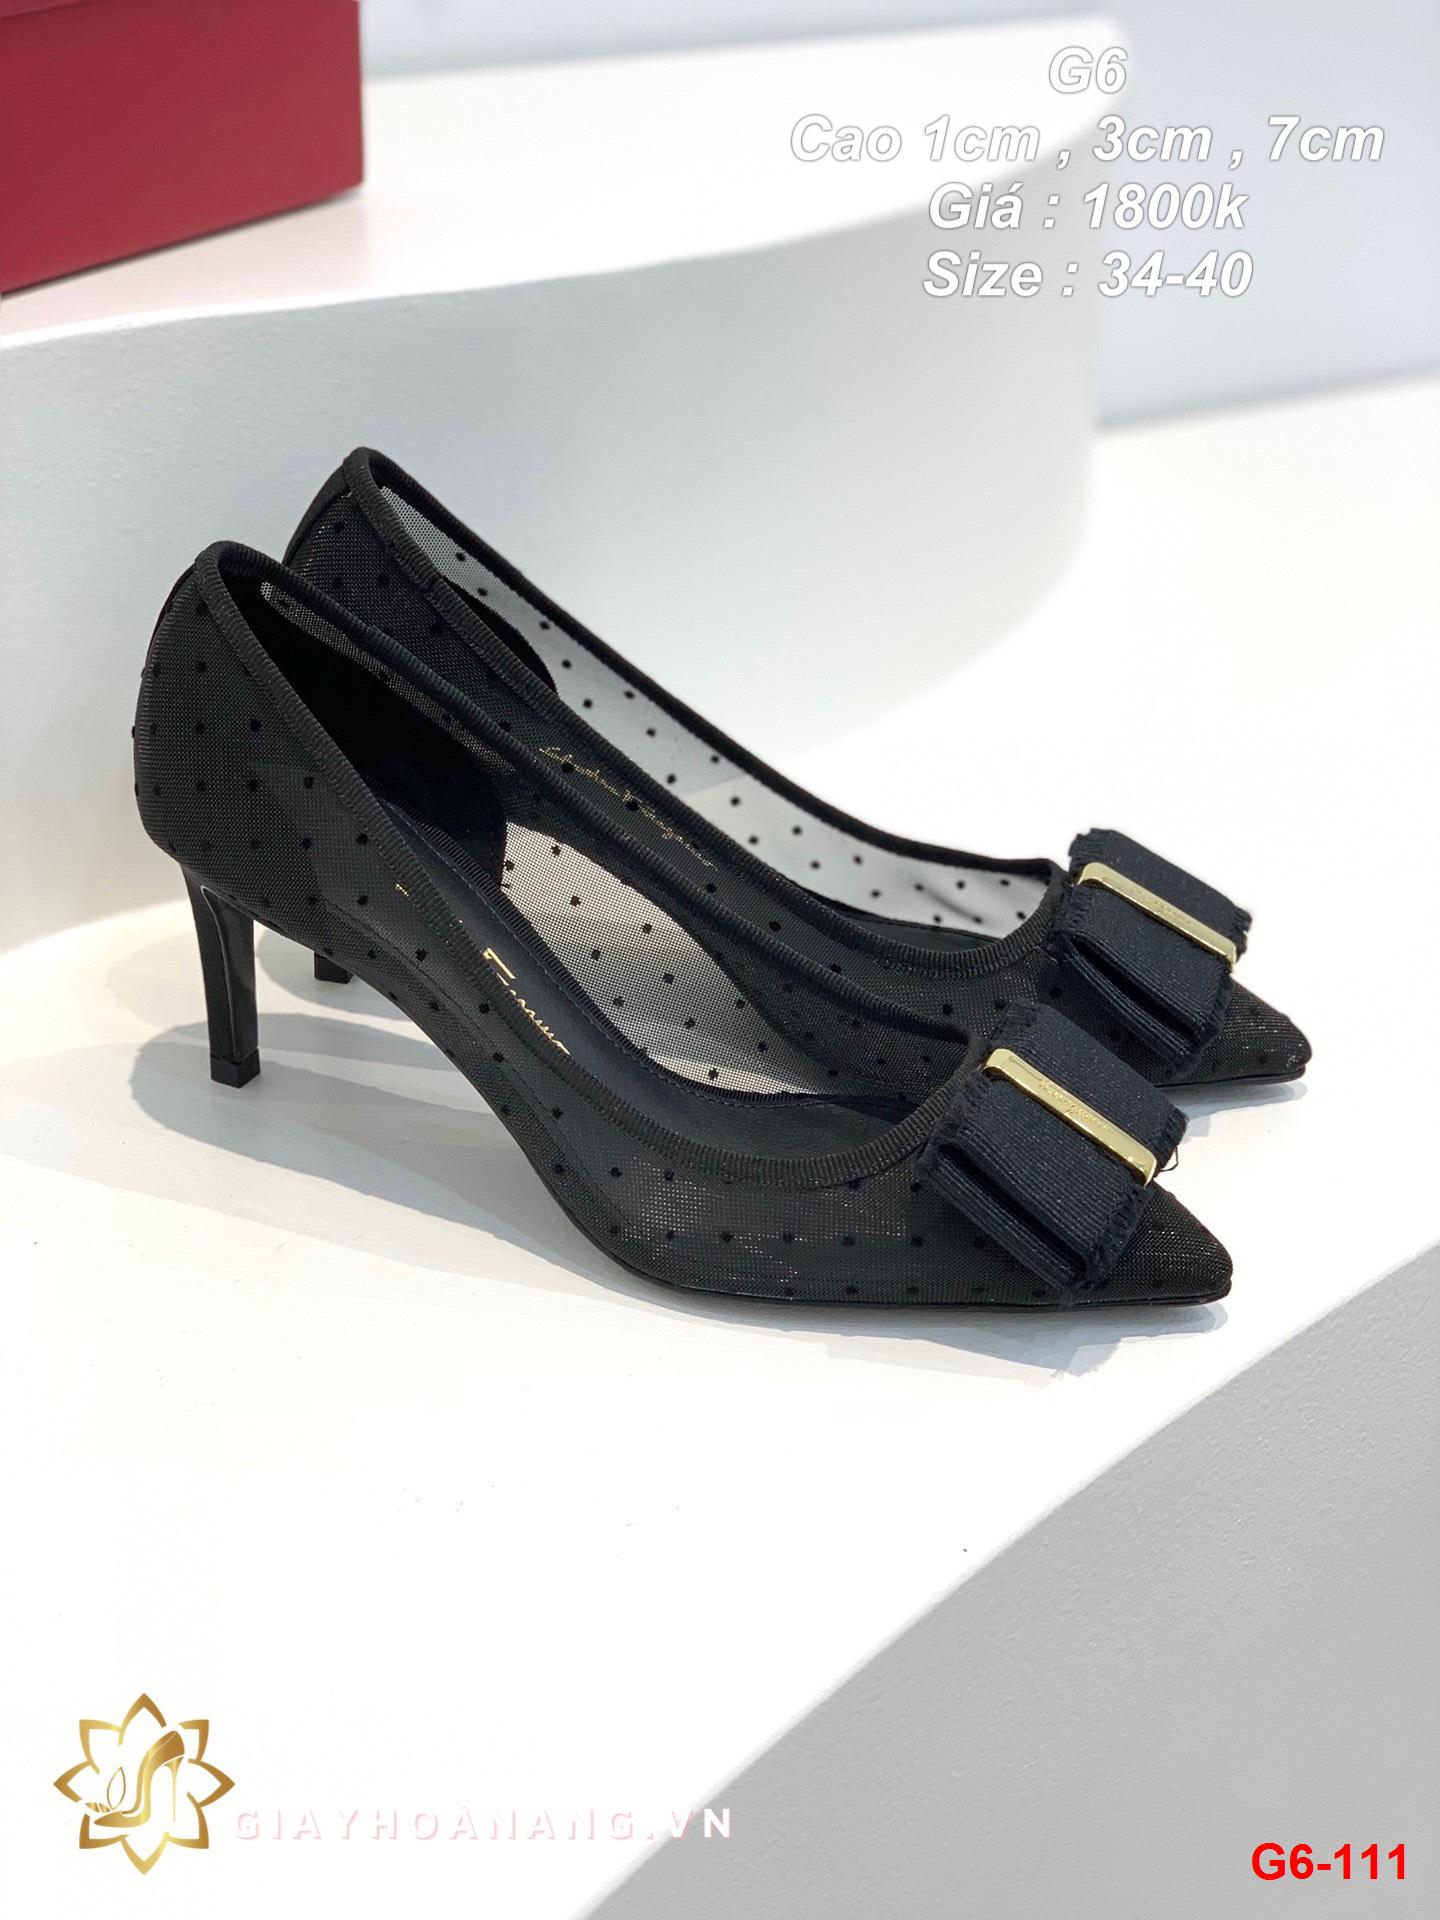 G6-111 Salvatore Ferragamo giày cao 1cm , 3cm , 7cm siêu cấp